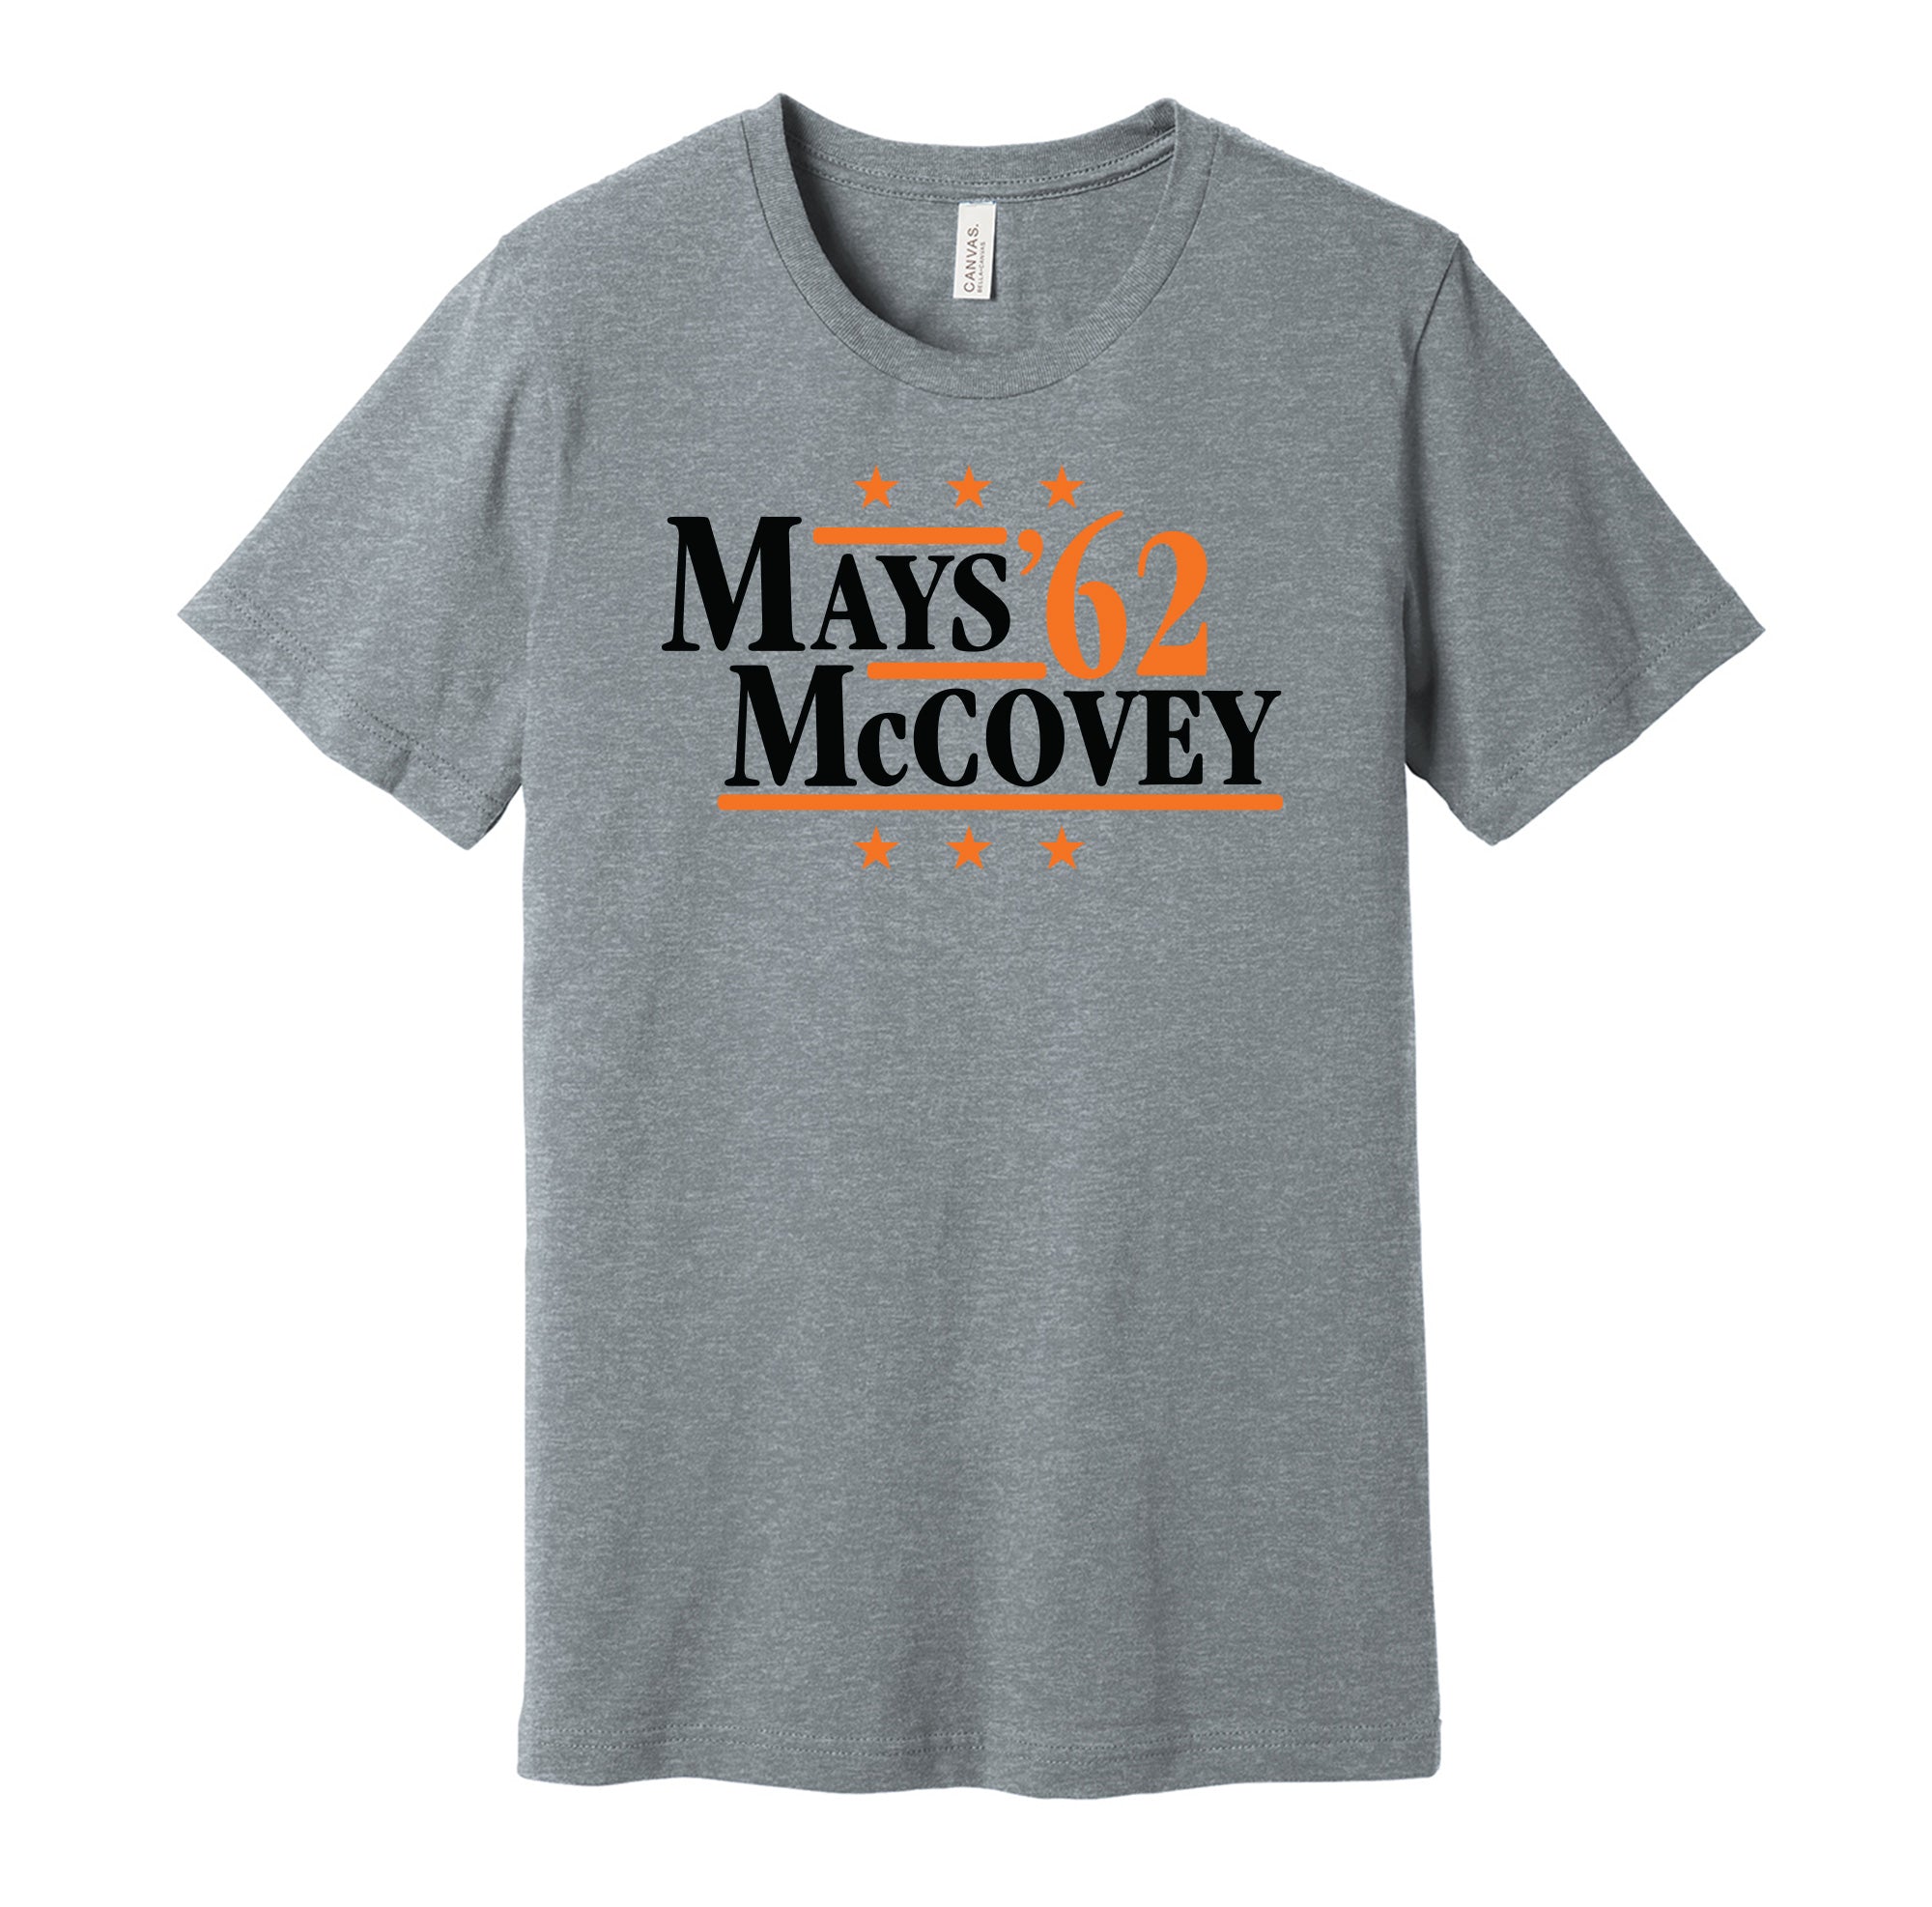 Mays & McCovey '62 - San Francisco Baseball Legends Political Campaign Parody T-Shirt - Hyper Than Hype Shirts XL / Grey Shirt